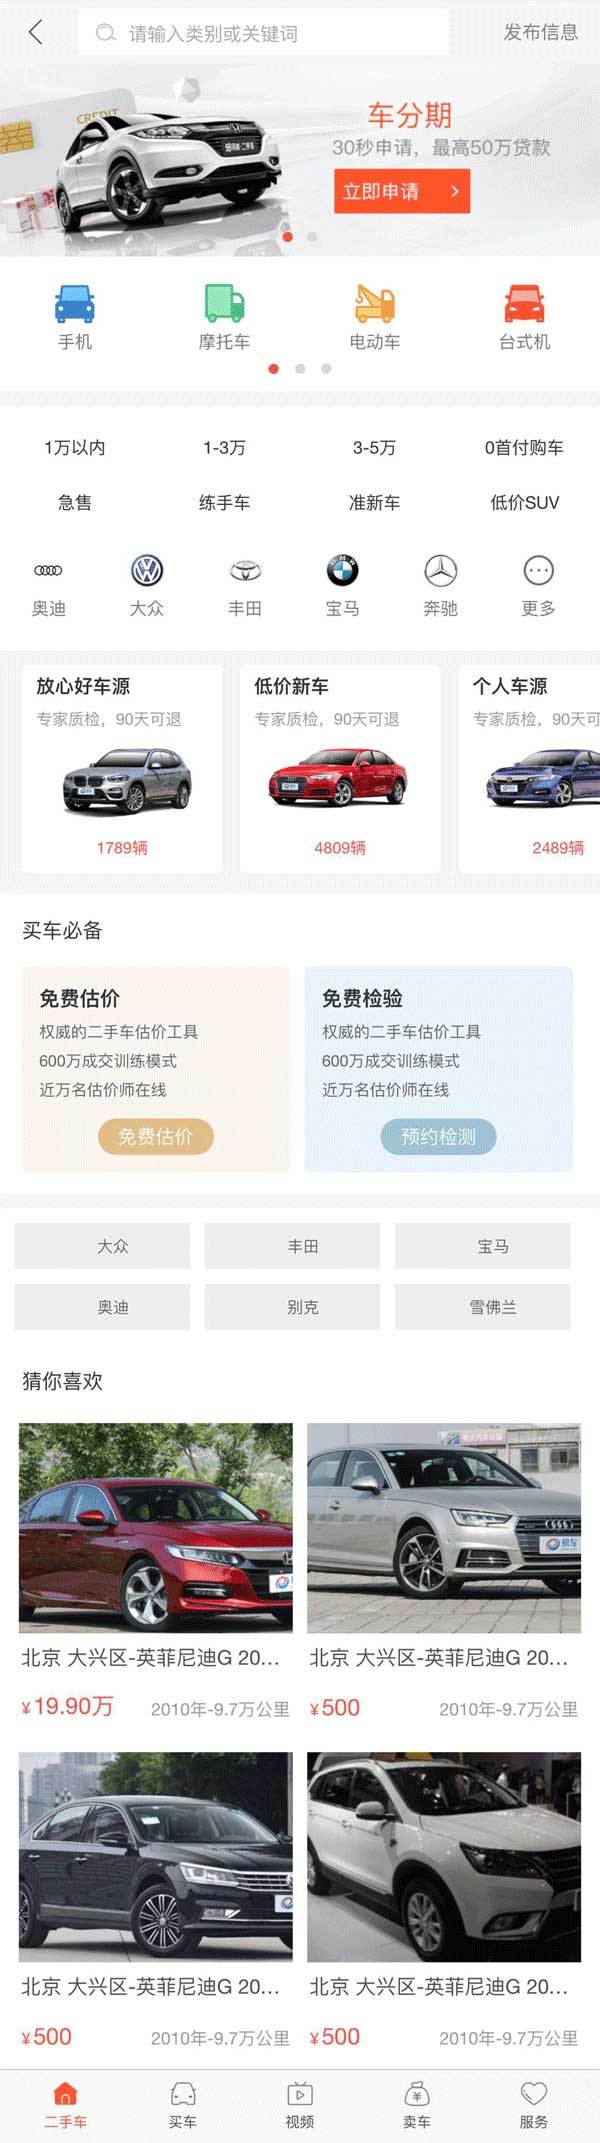 html5网站源码下载 手机APP买卖汽车商城首页模板 DIV+CSS代码下载